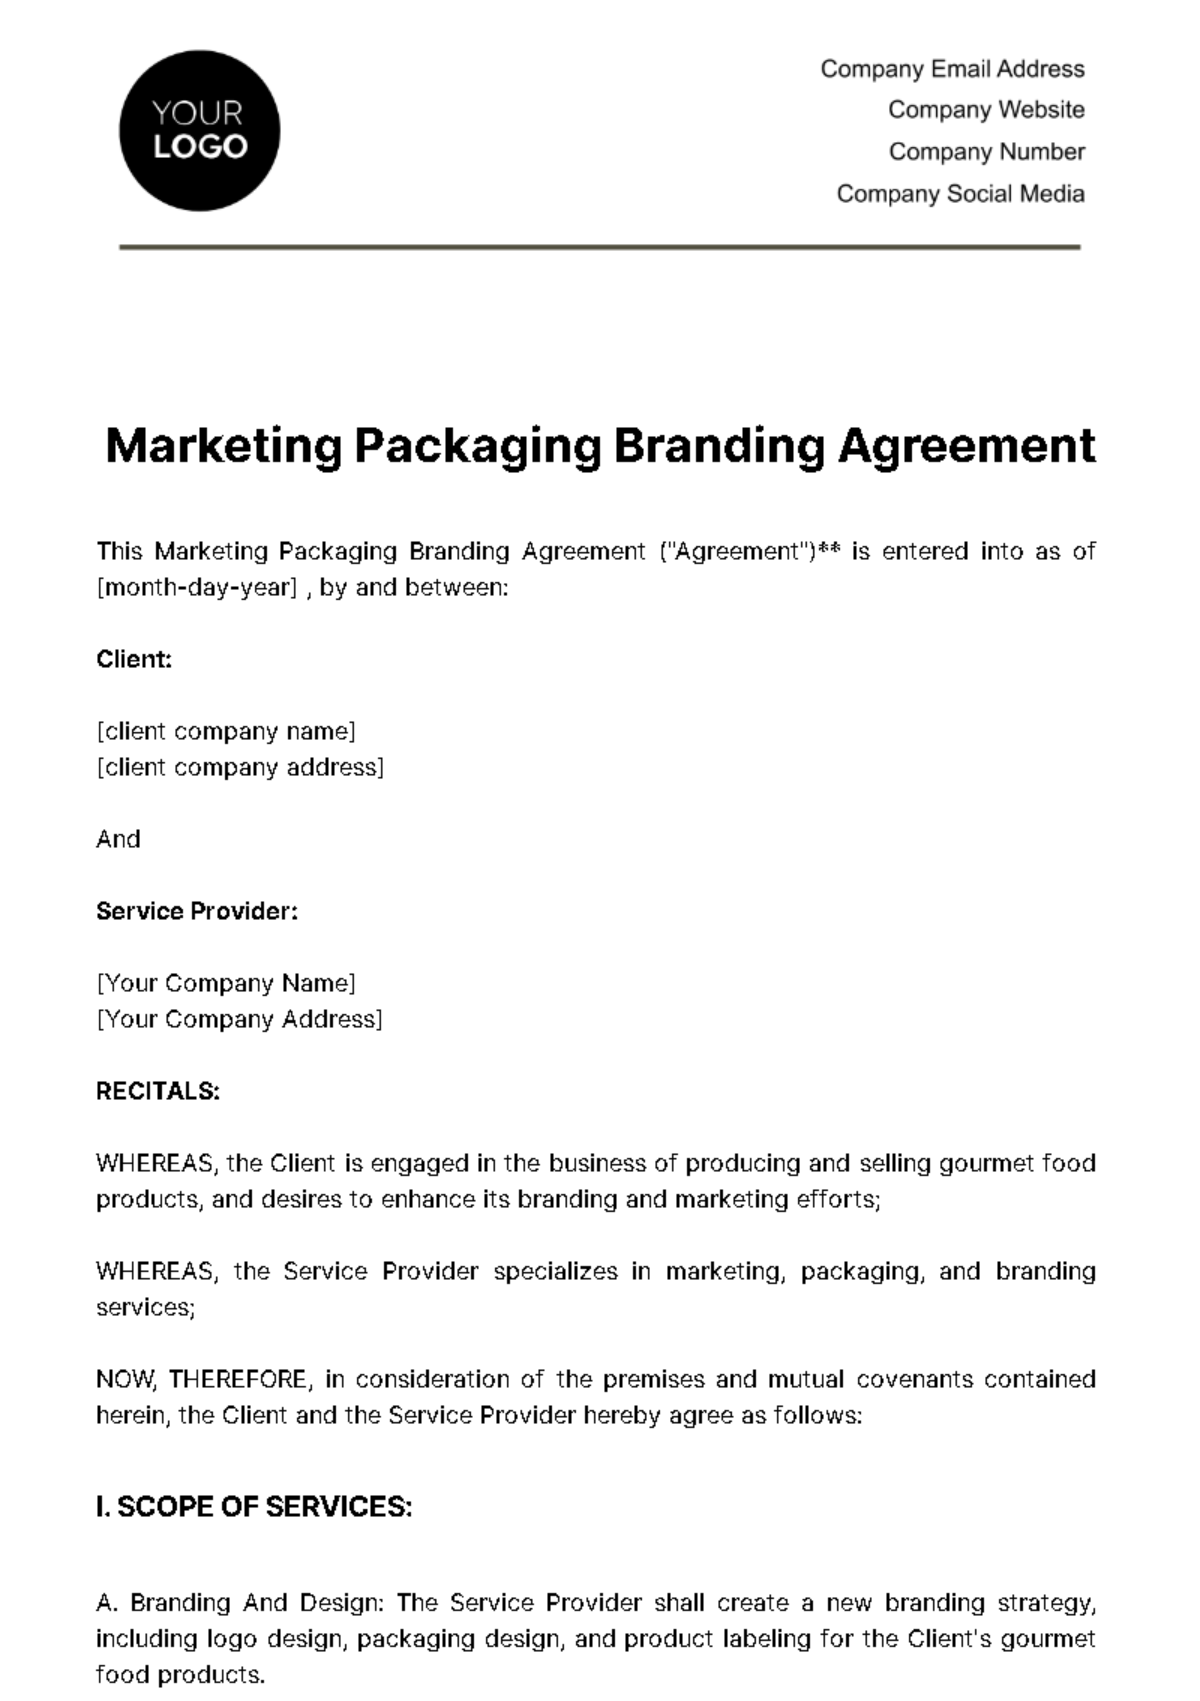 Marketing Packaging Branding Agreement Template